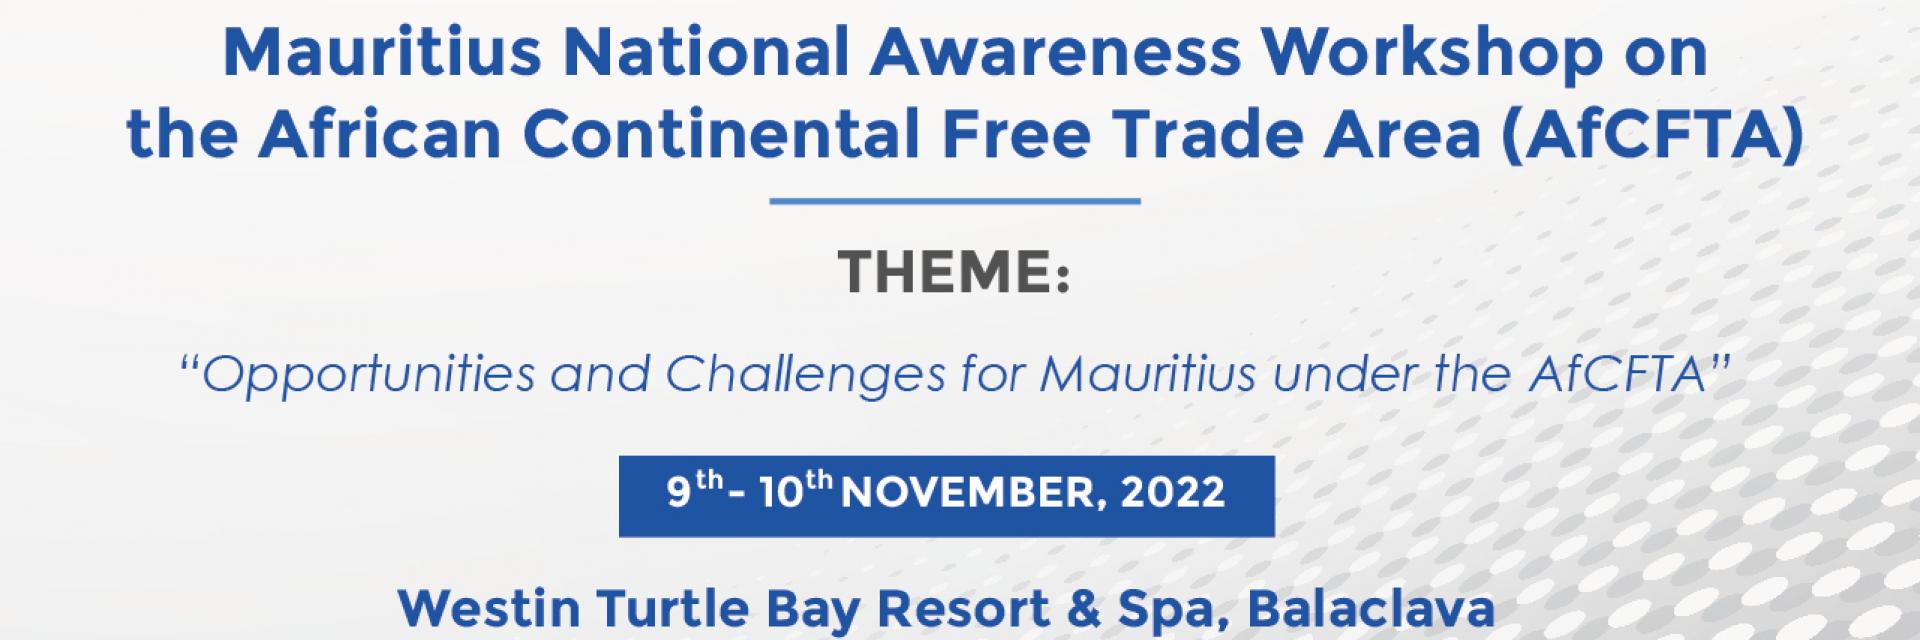 African Continental Free Trade Area (AfCFTA) National Awareness Workshop